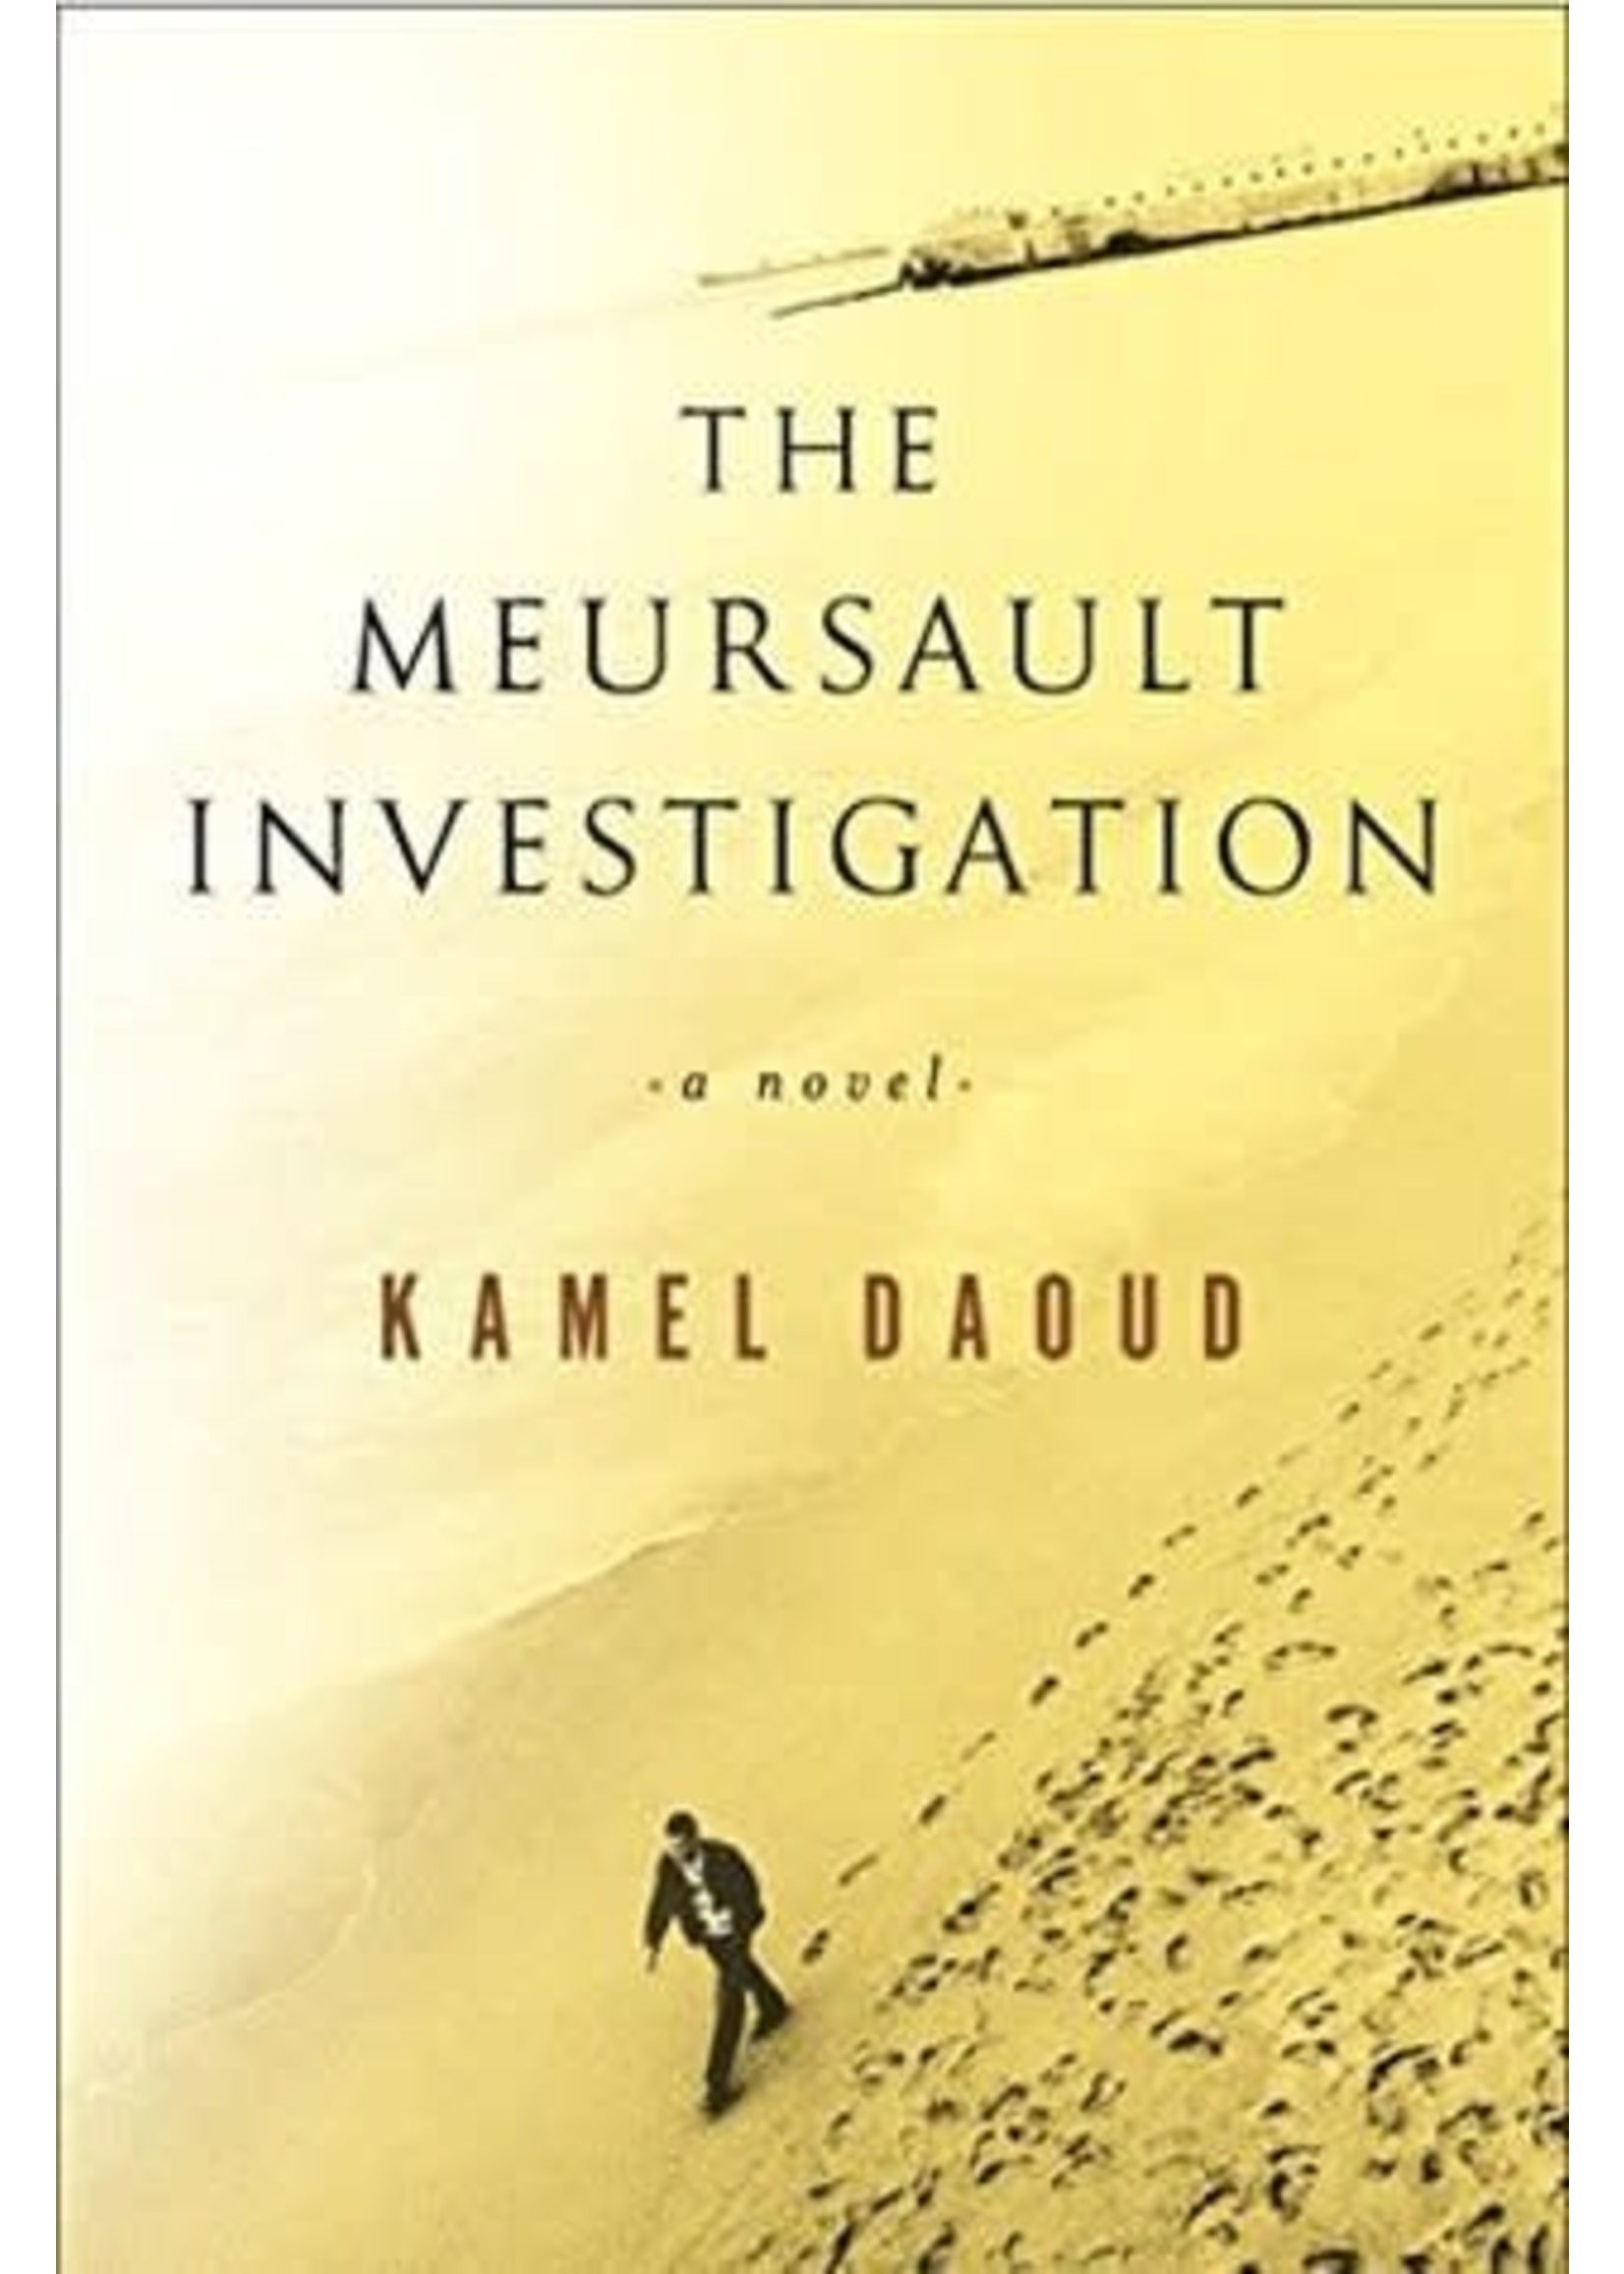 The Meursault Investigation by Kamel Daoud